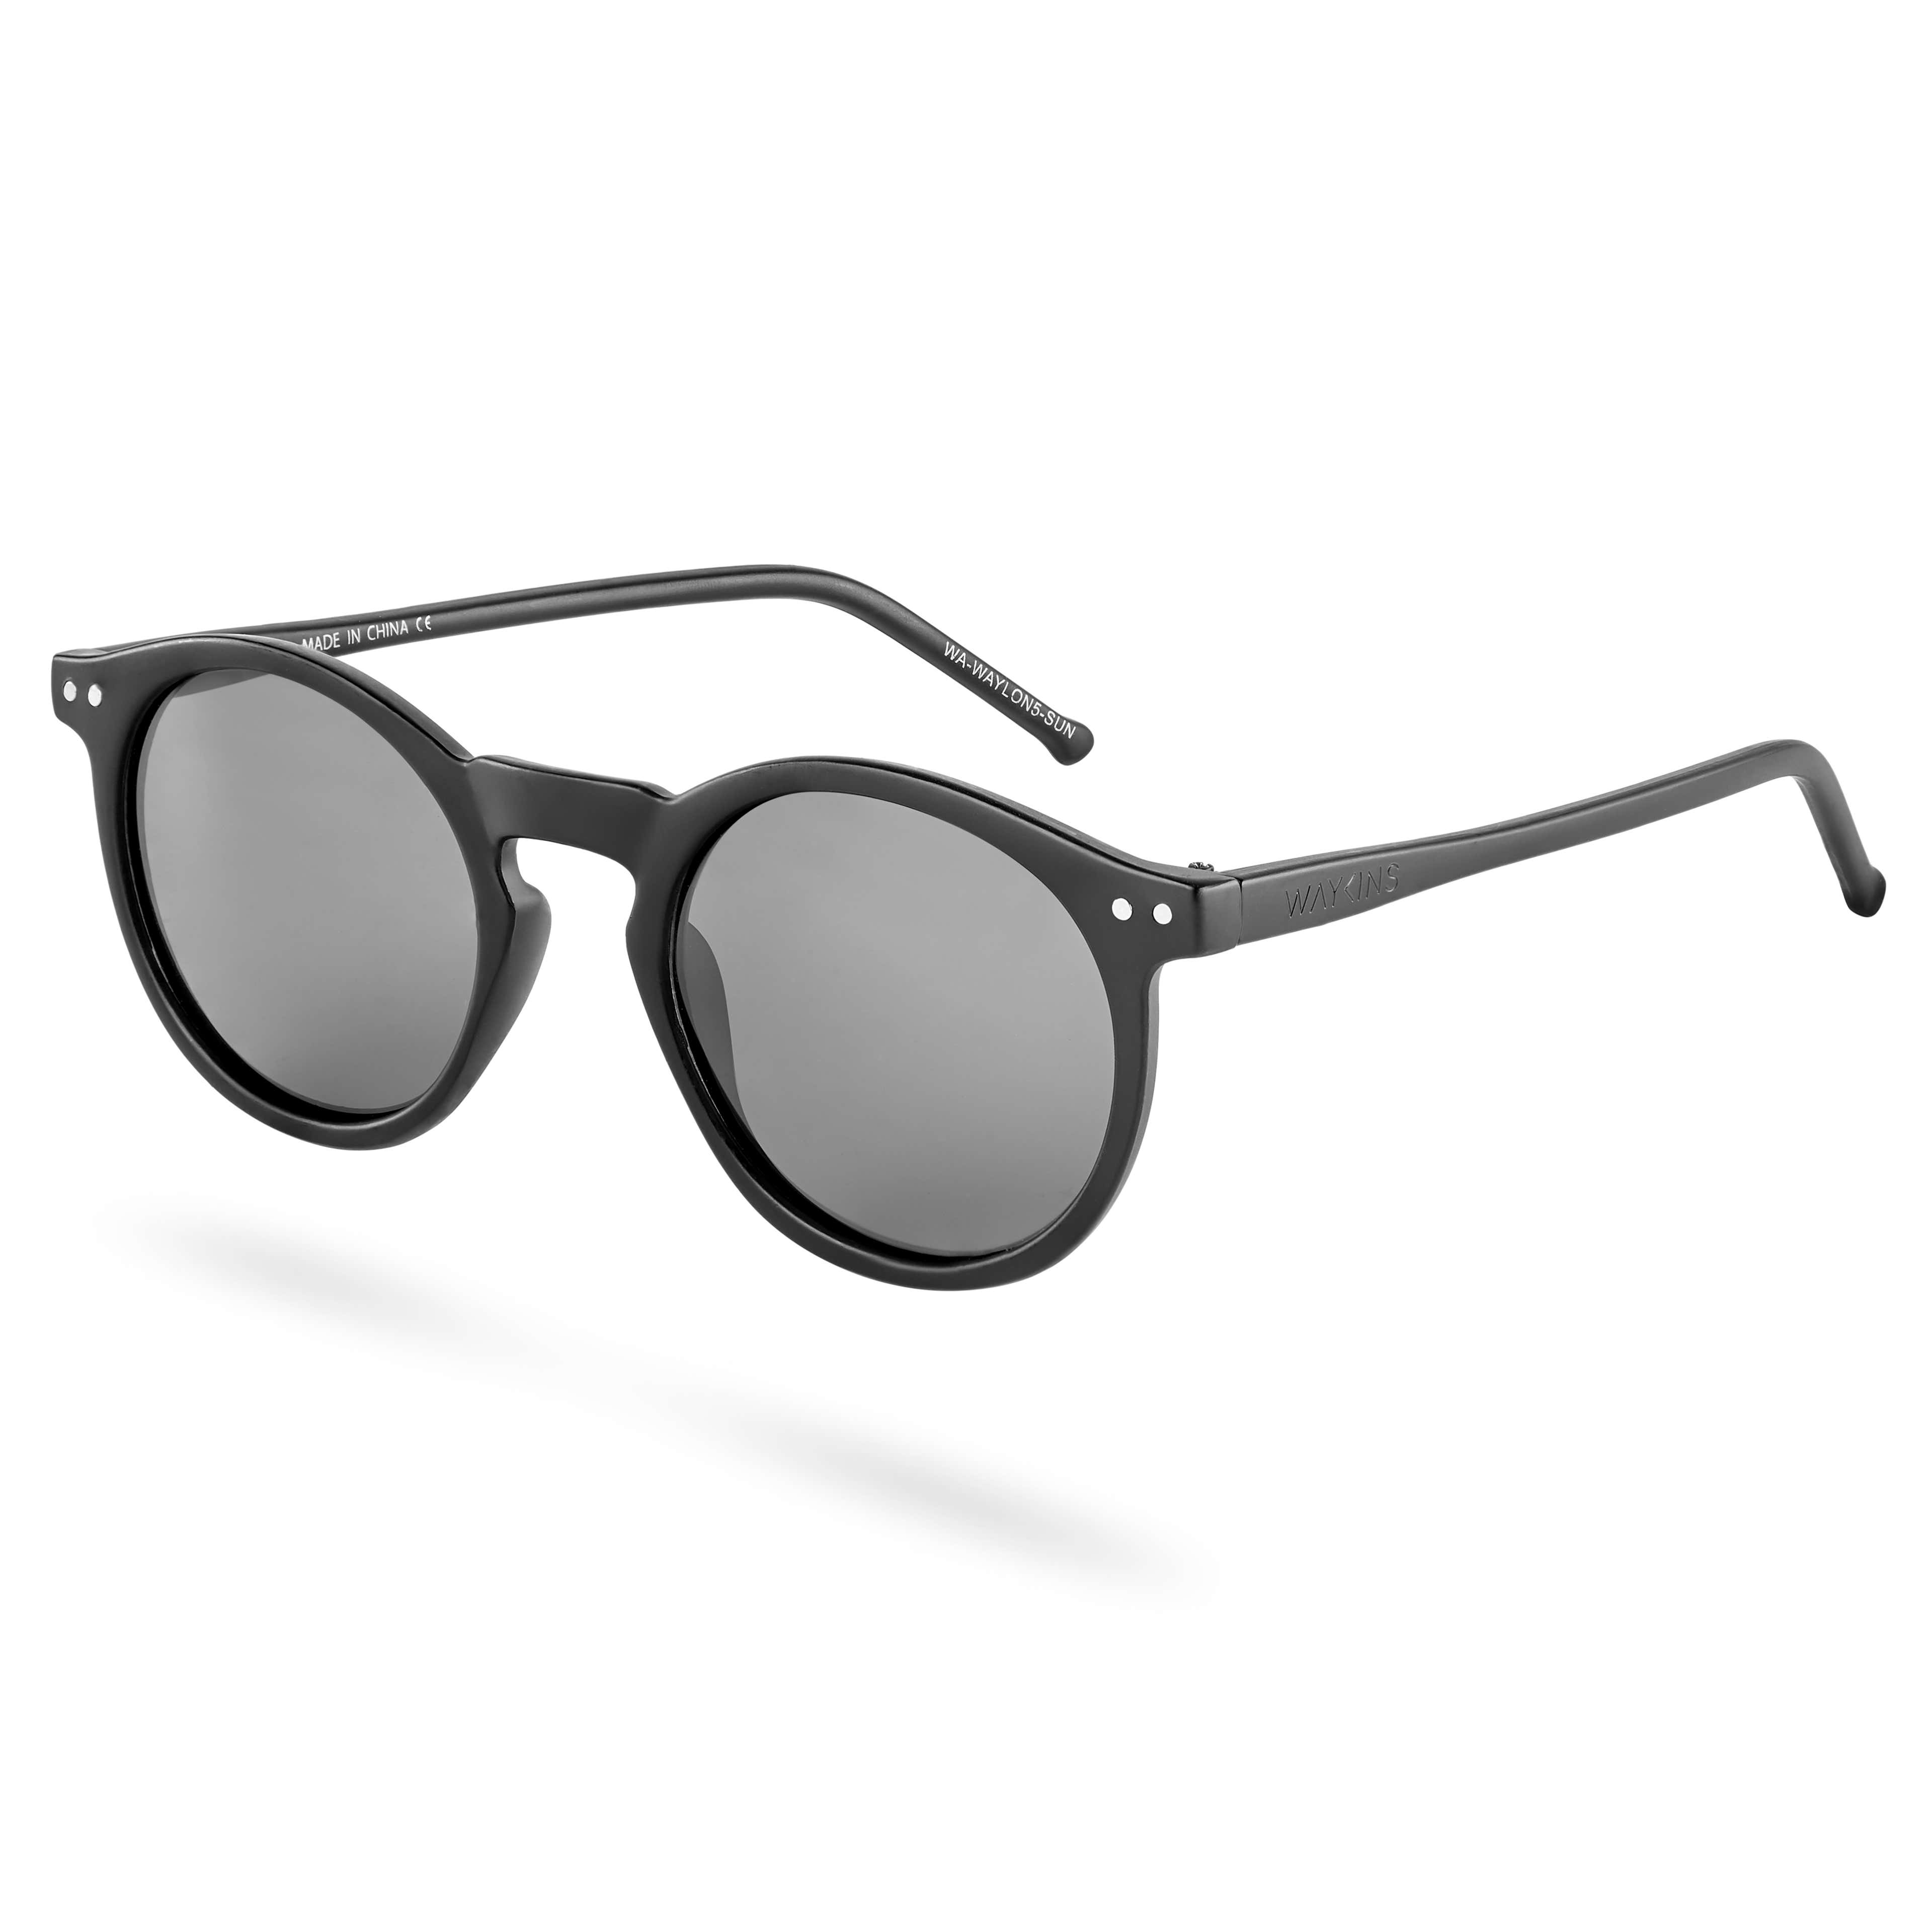 Waylon Vista Svarte Solbriller